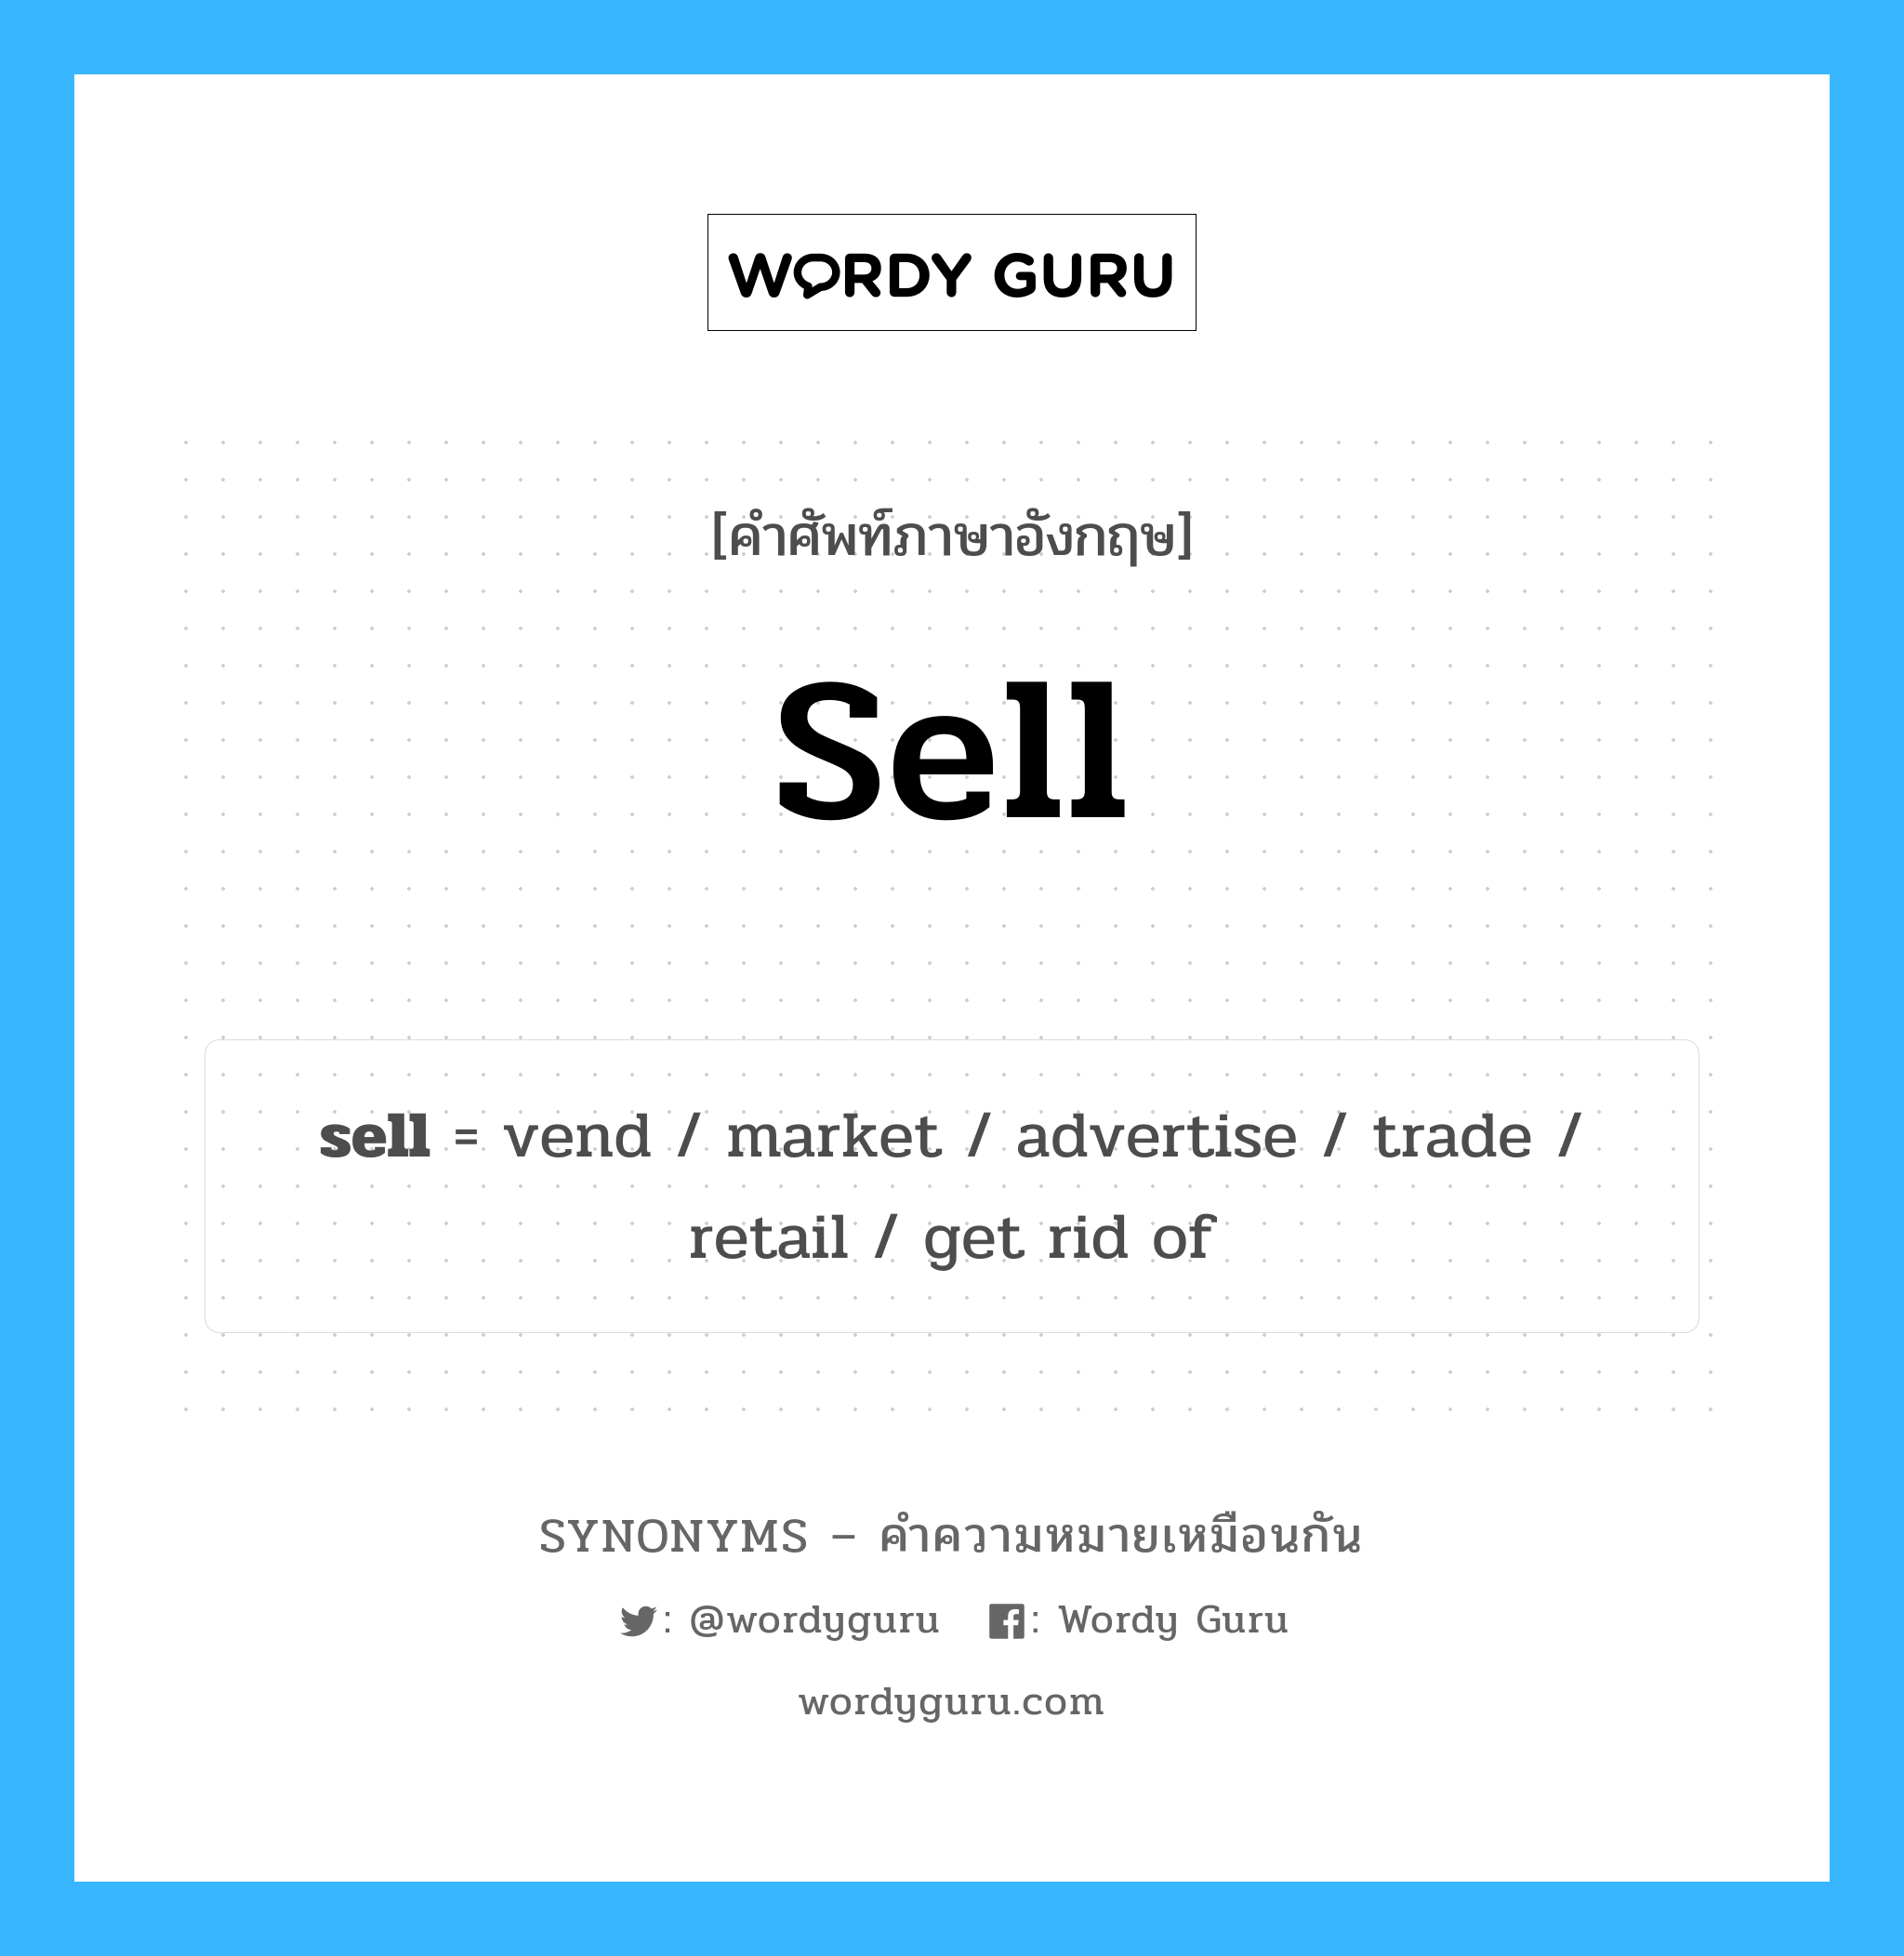 sell เป็นหนึ่งใน trade และมีคำอื่น ๆ อีกดังนี้, คำศัพท์ภาษาอังกฤษ sell ความหมายคล้ายกันกับ trade แปลว่า การค้า หมวด trade